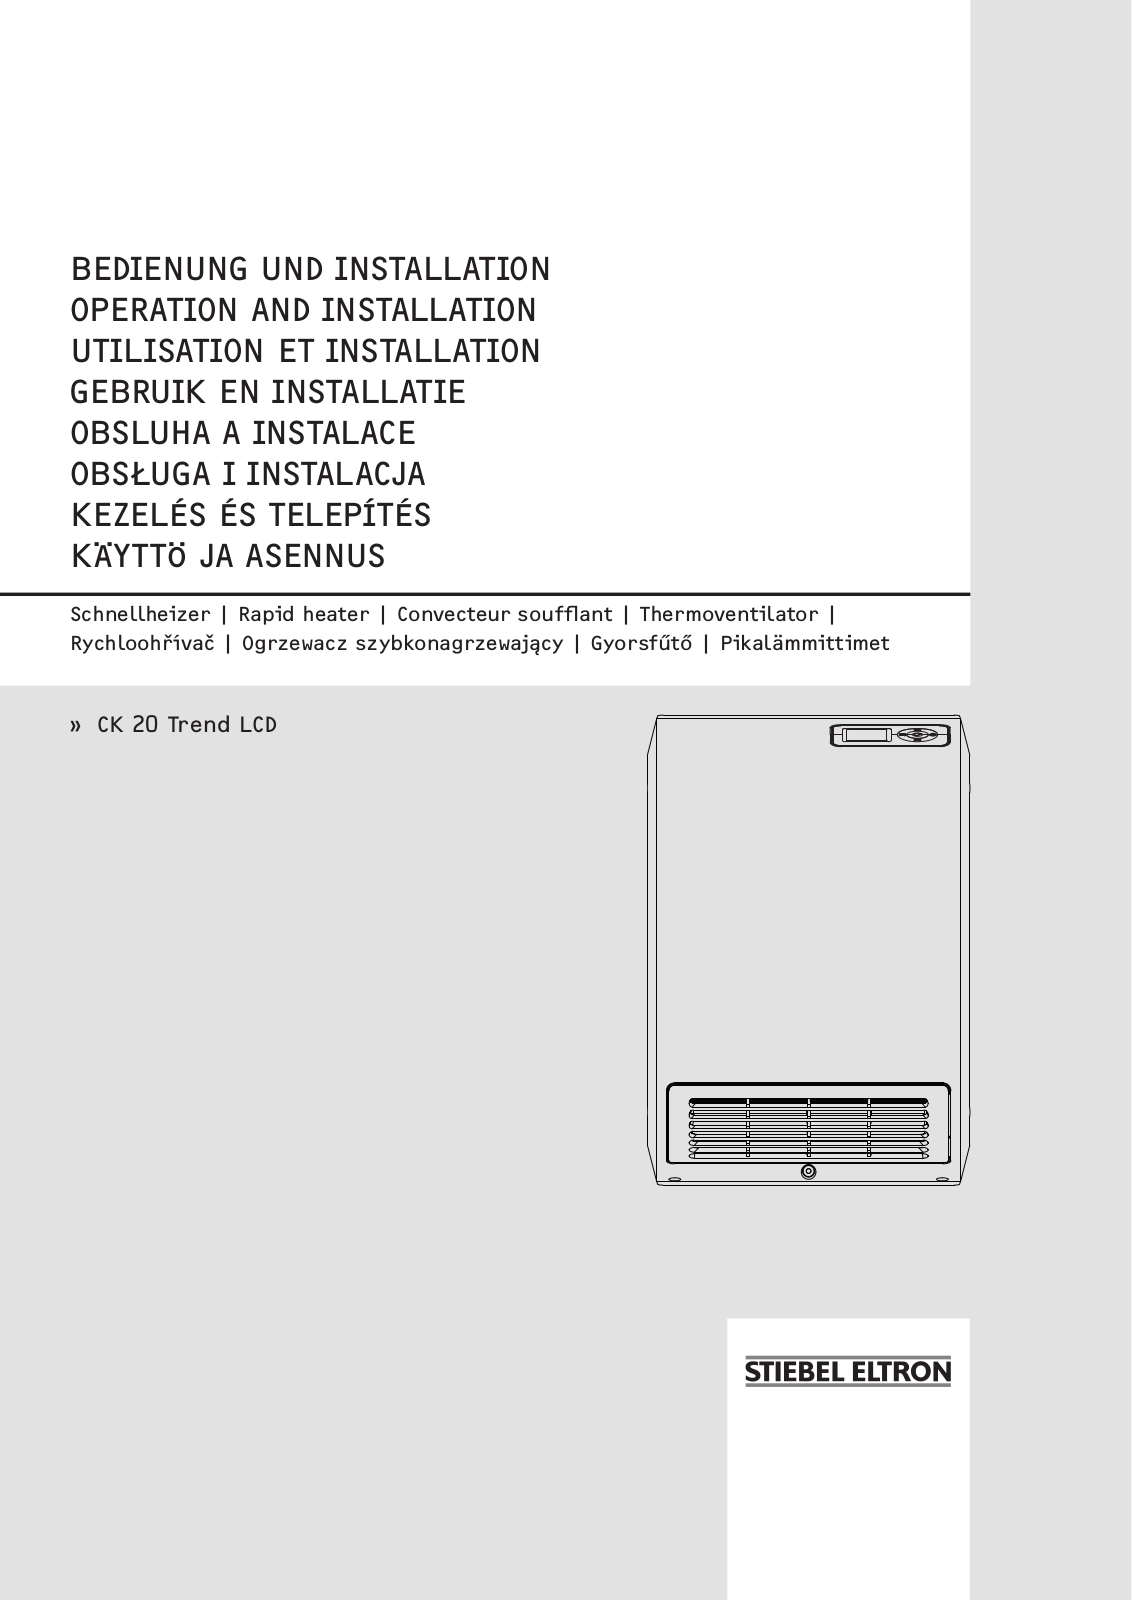 Stiebel Eltron CK 20 TREND LCD User Manual